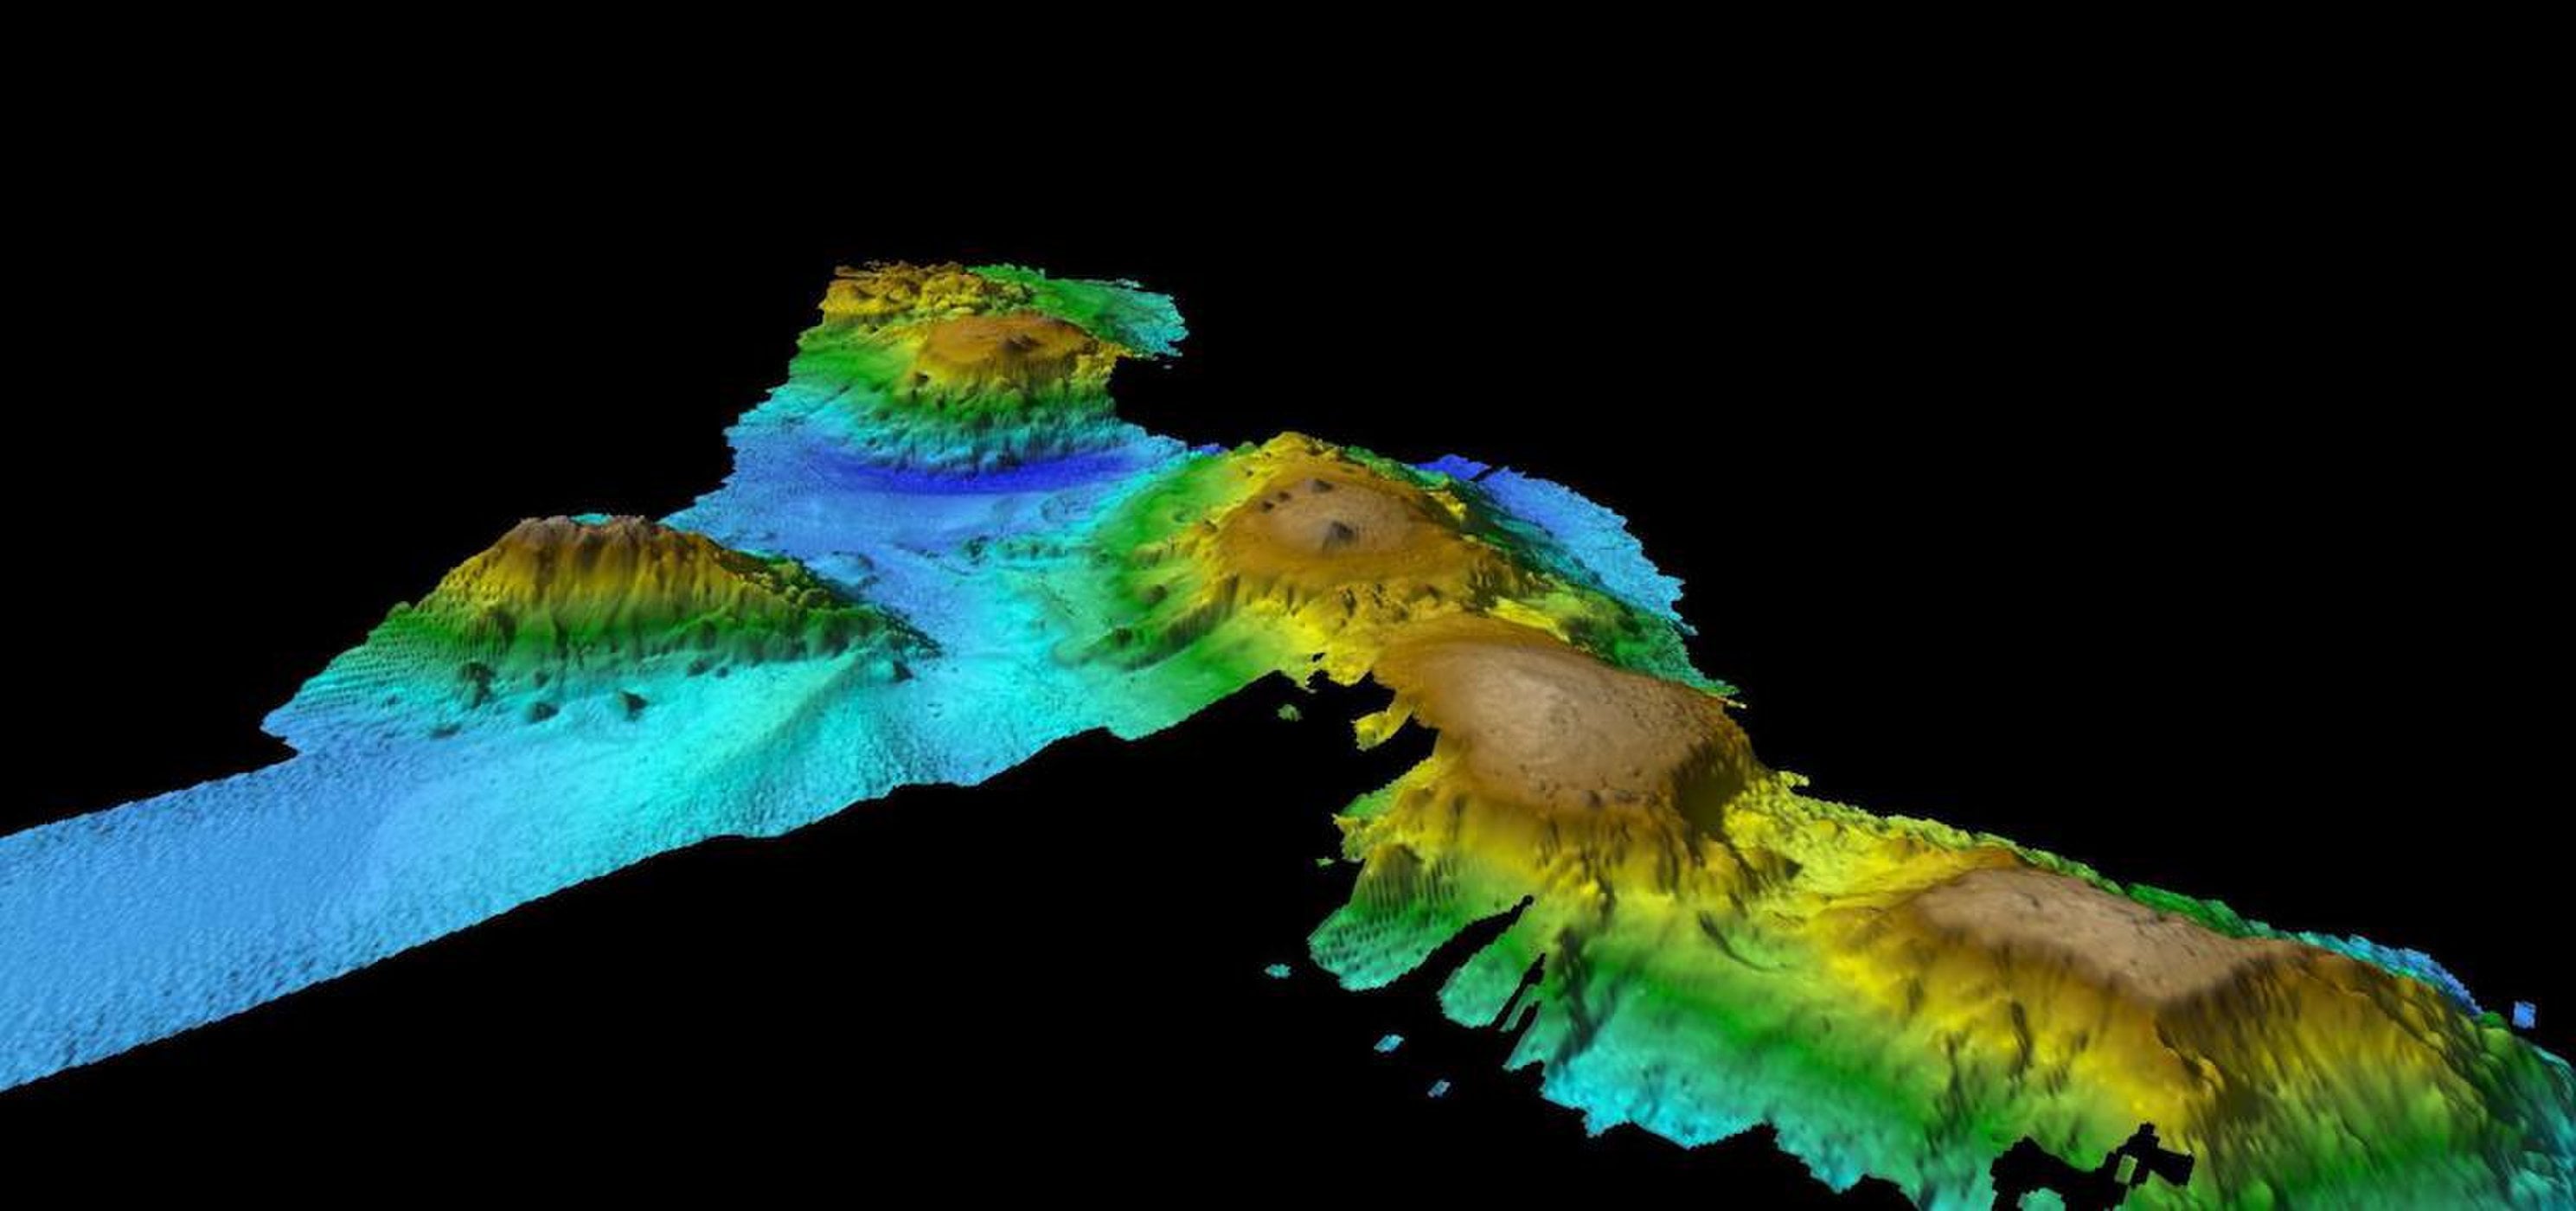 Underwater Volcanic World Near Tasmania